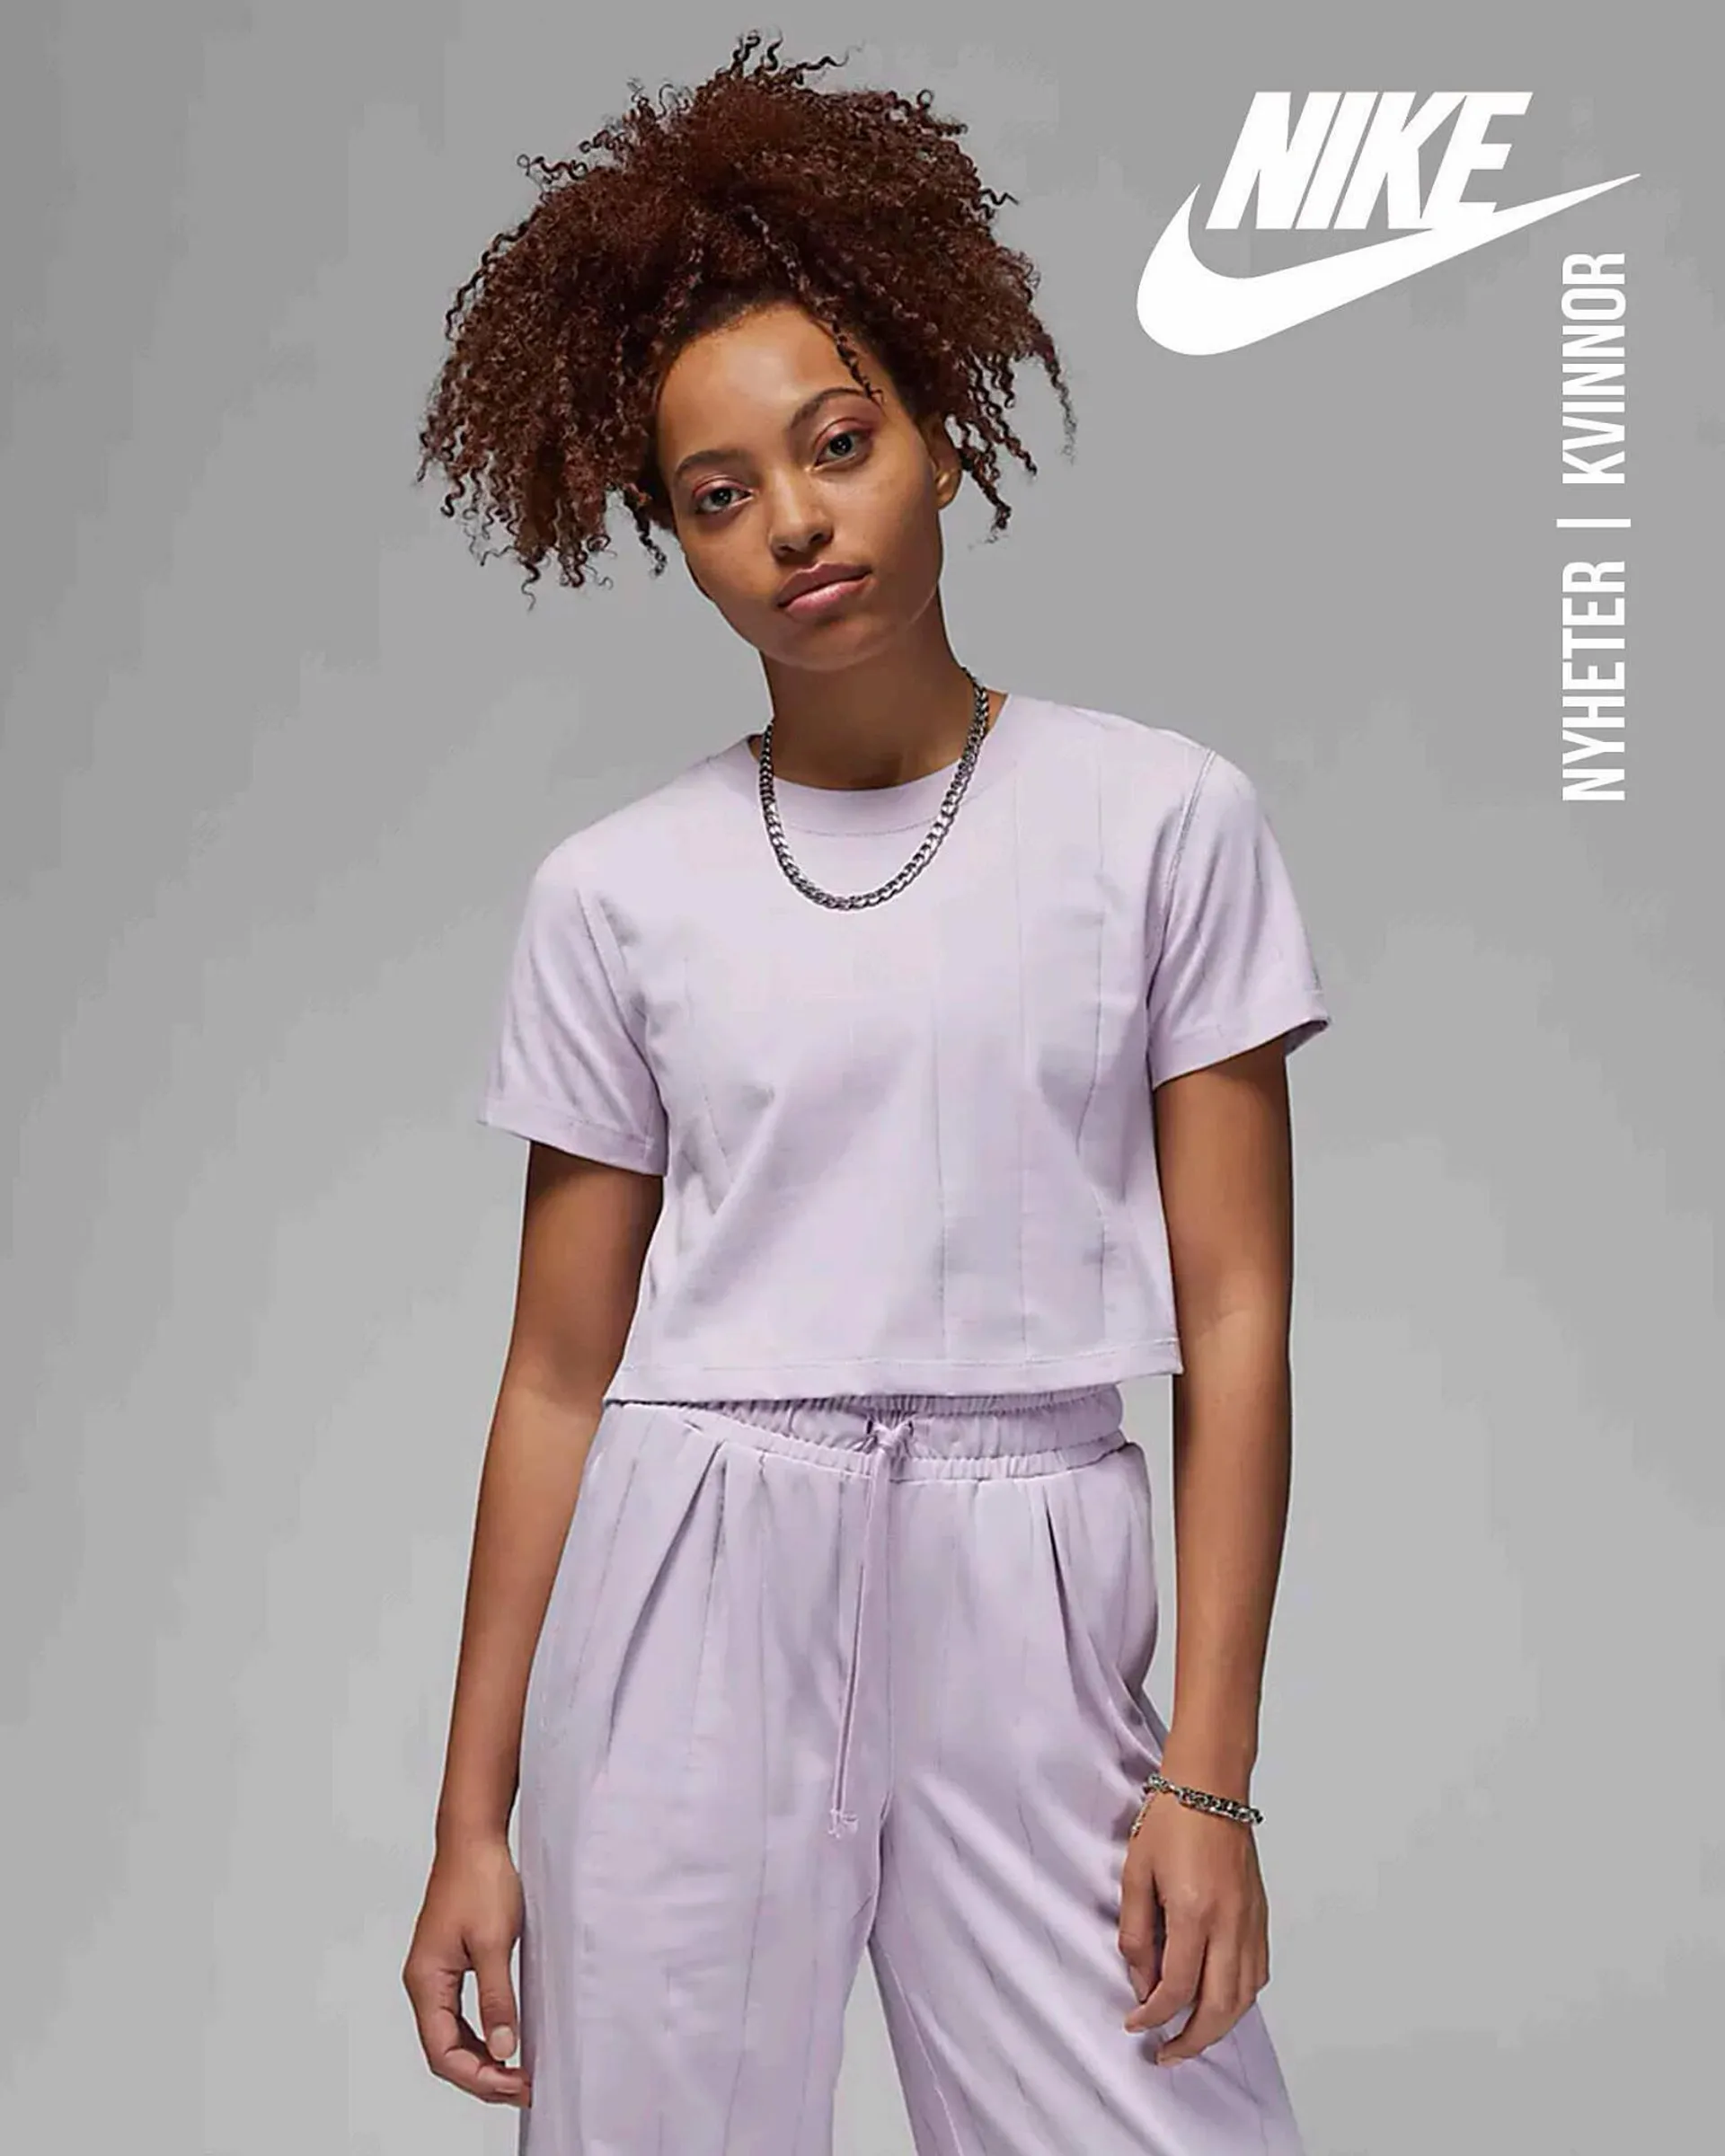 Nike reklamblad - 1